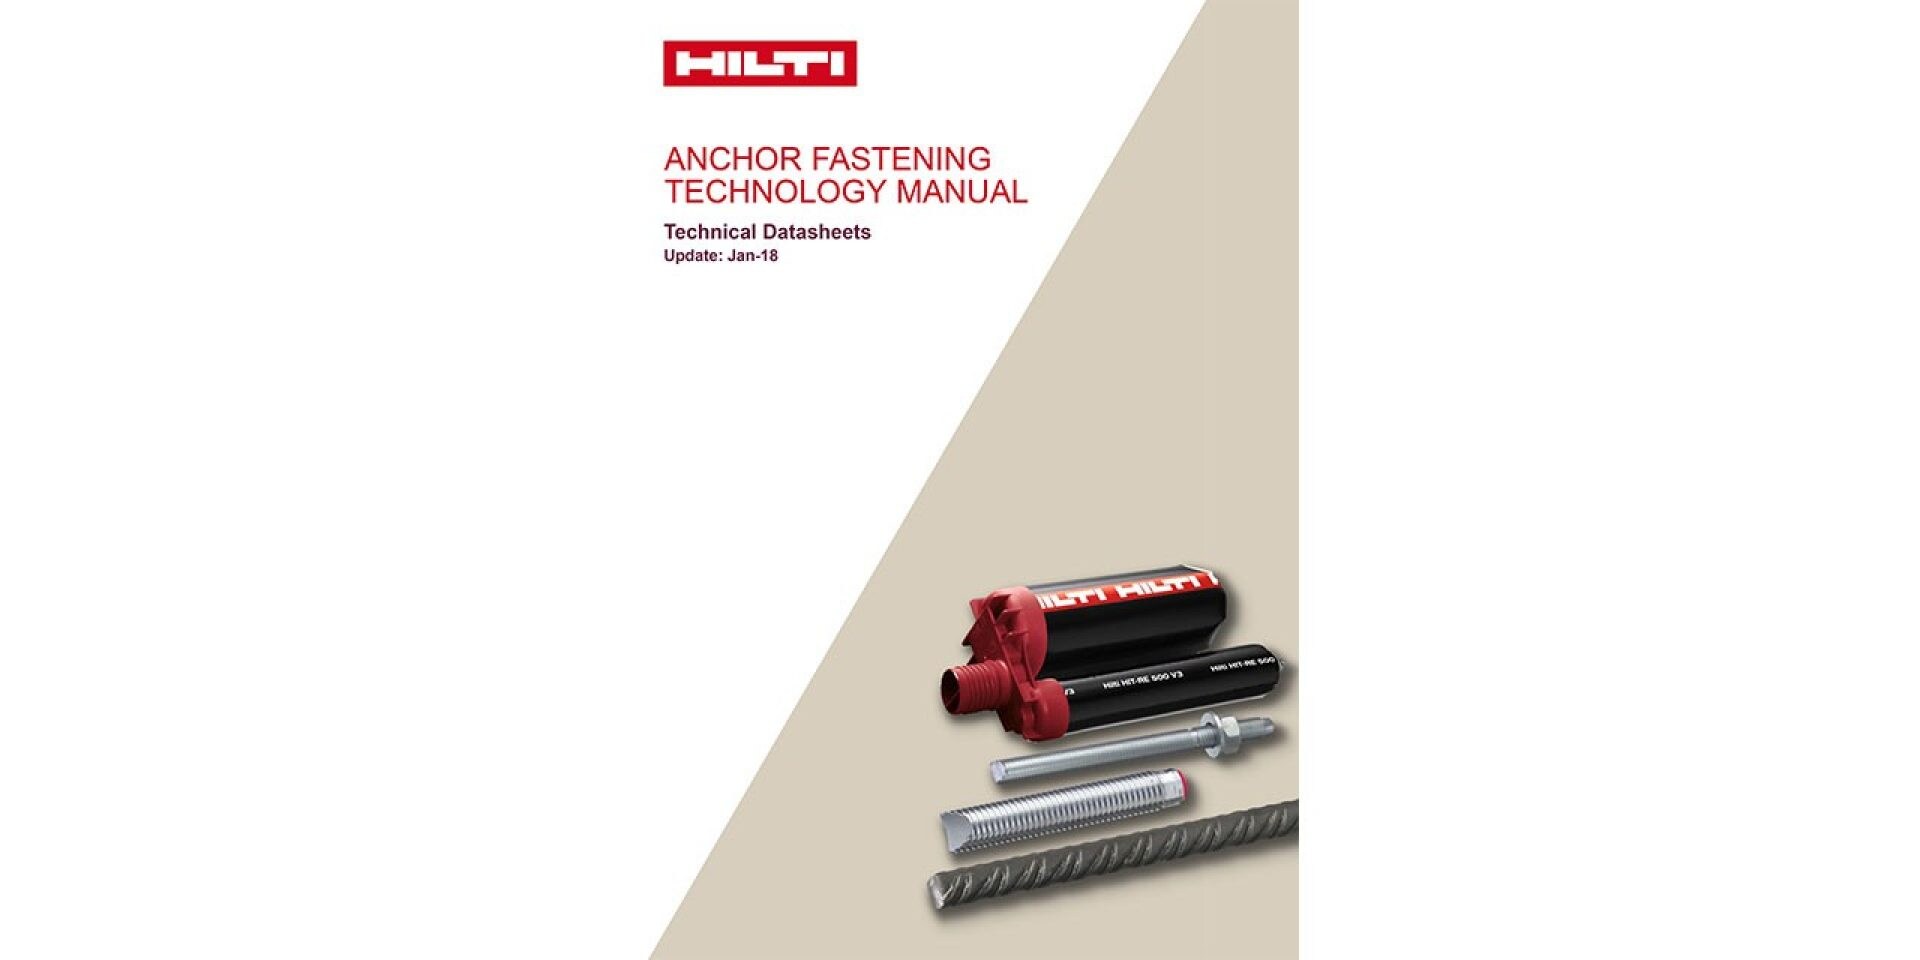 Hilti fastening technology manual